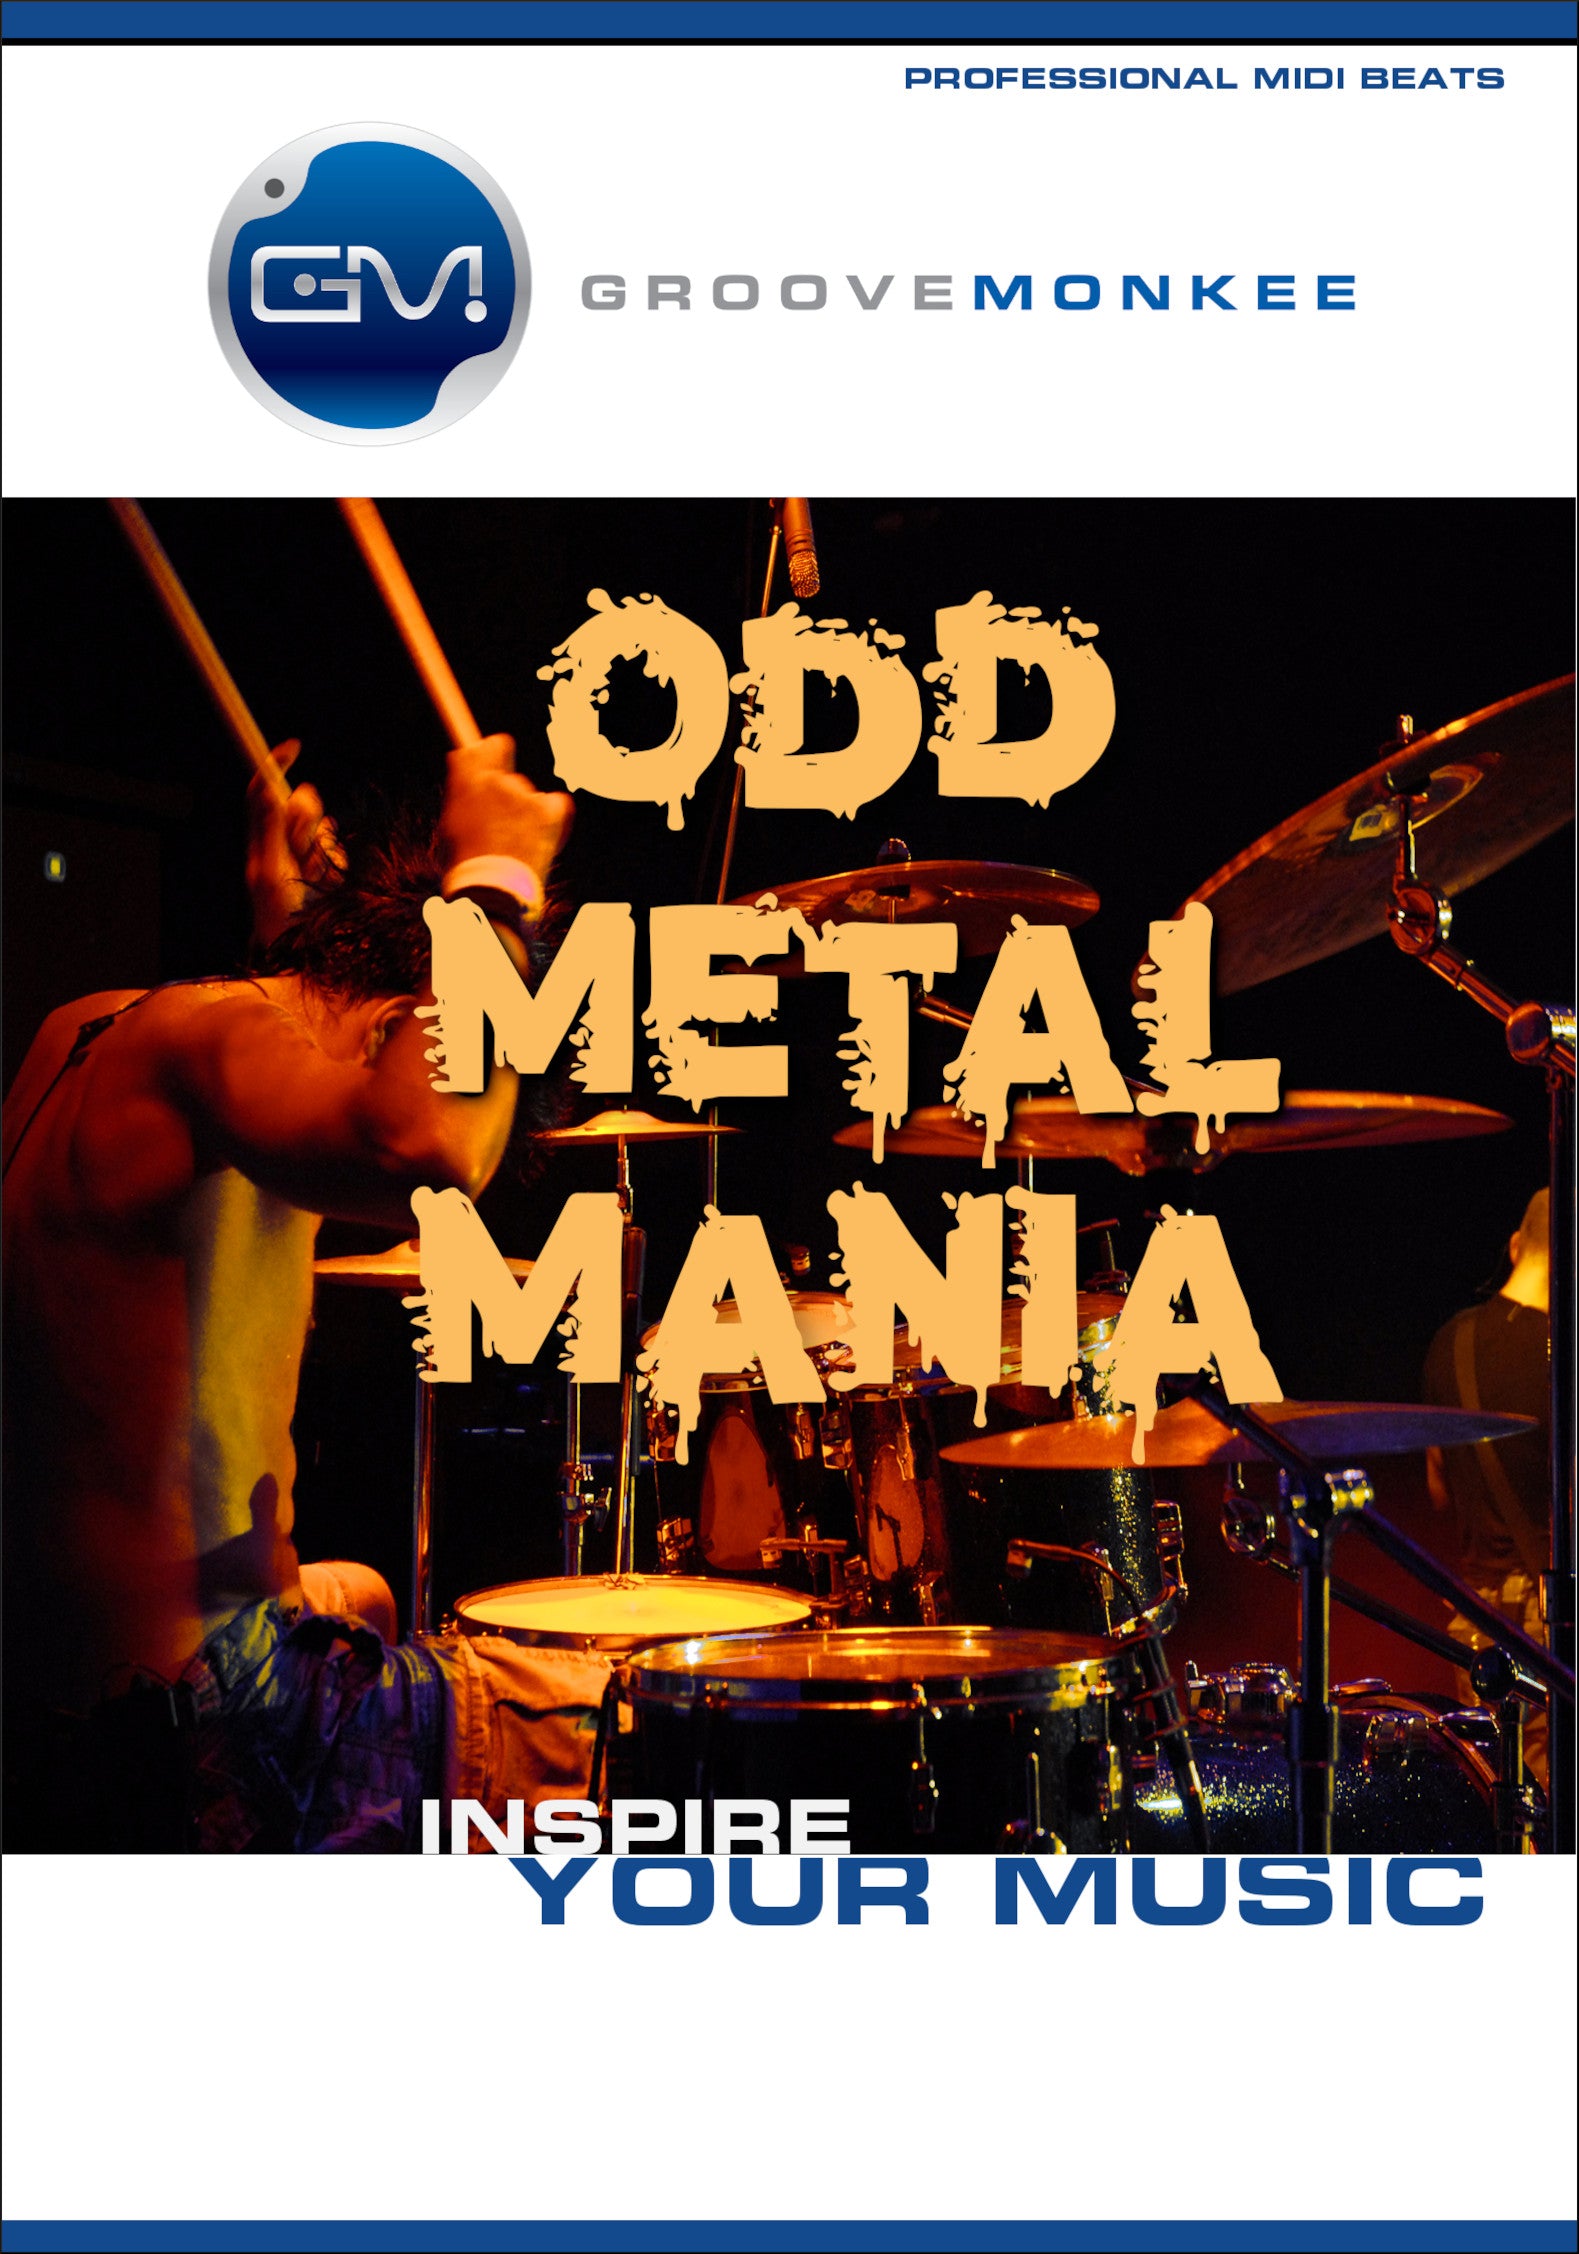 Odd Metal Mania